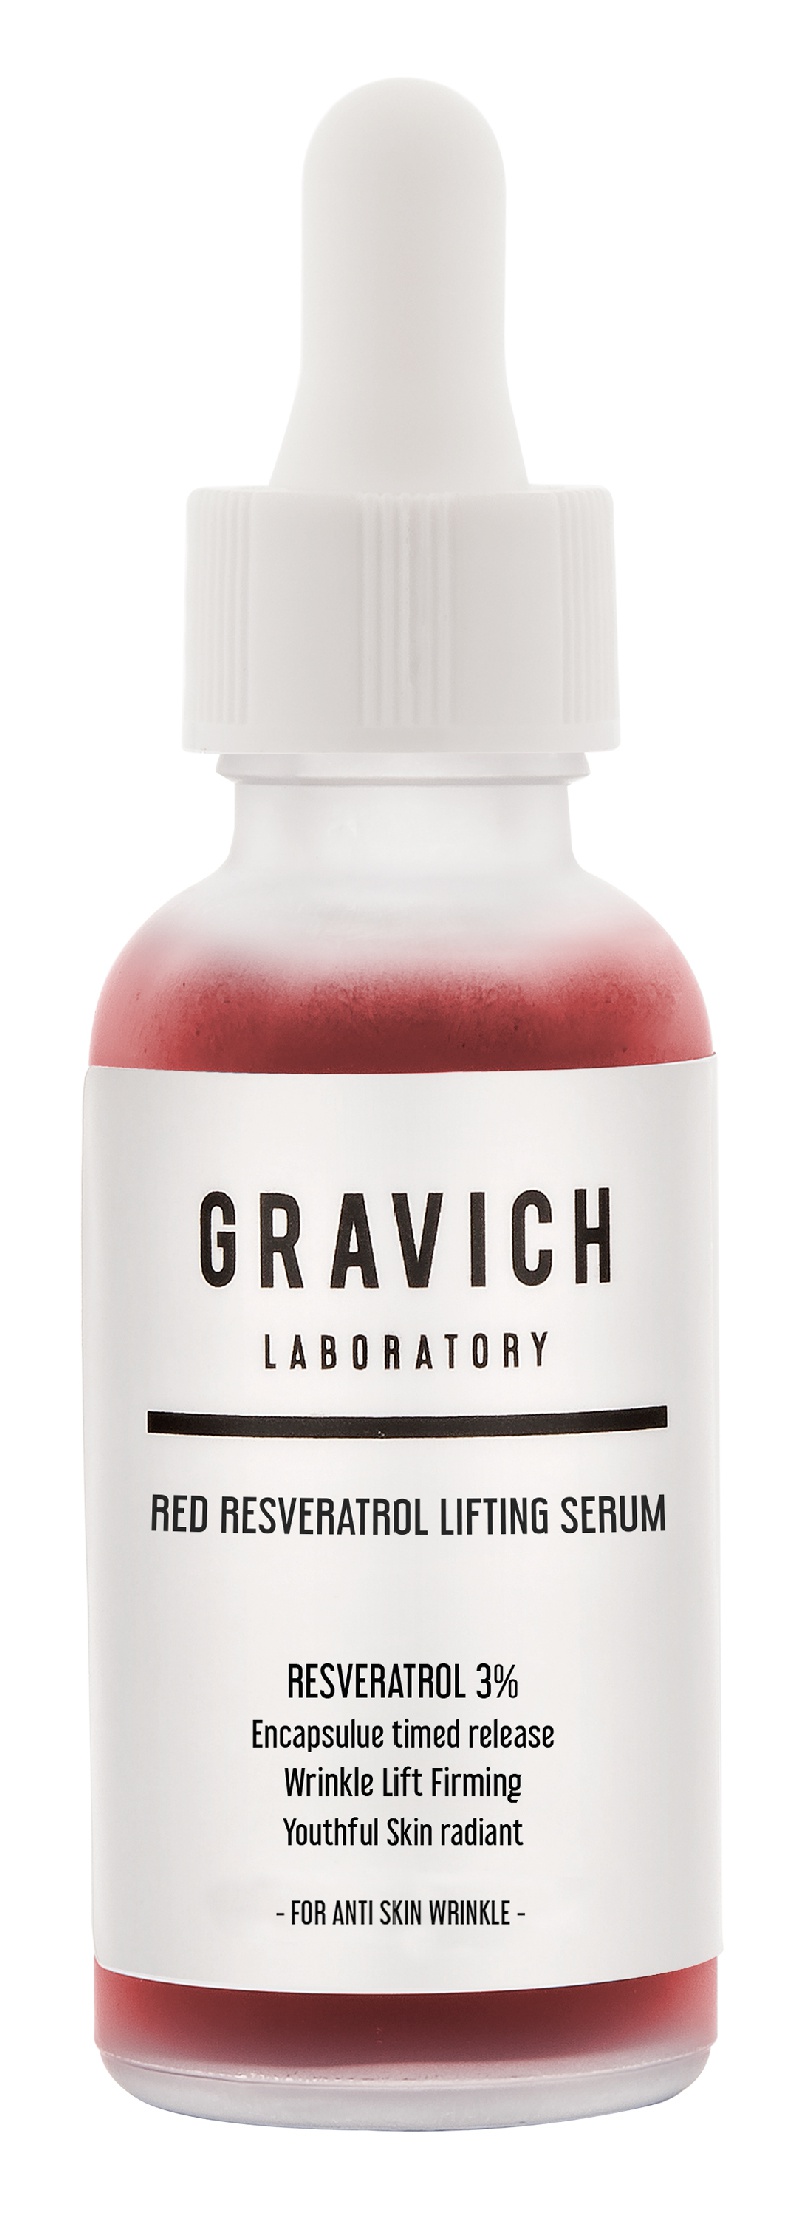 GRAVICH Red Resveratrol Lifting Serum